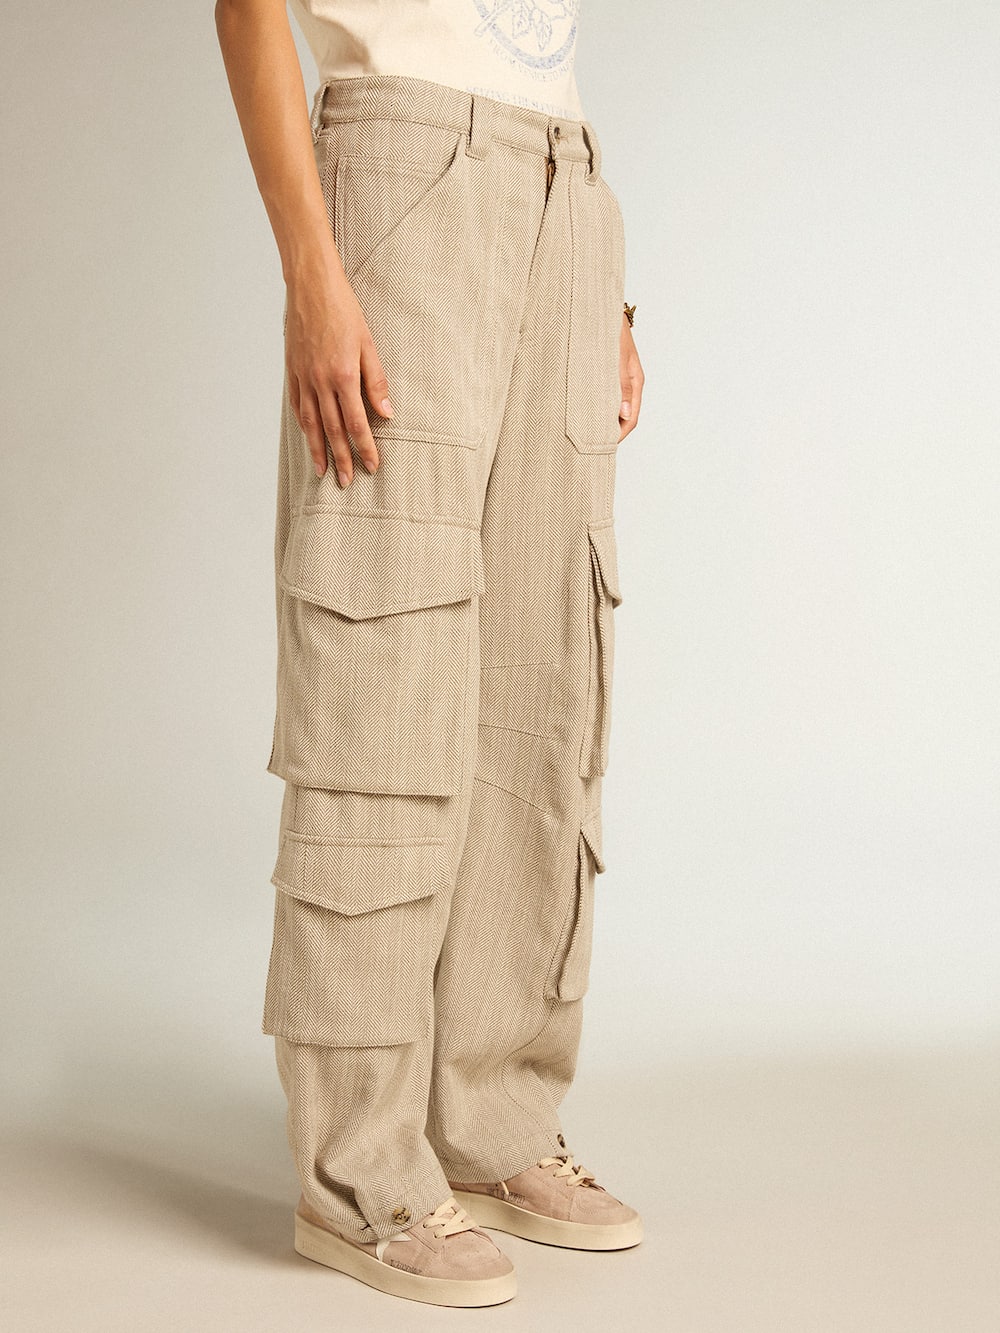 Golden Goose - Women's dark olive-colored cotton cargo pants with a herringbone design in 